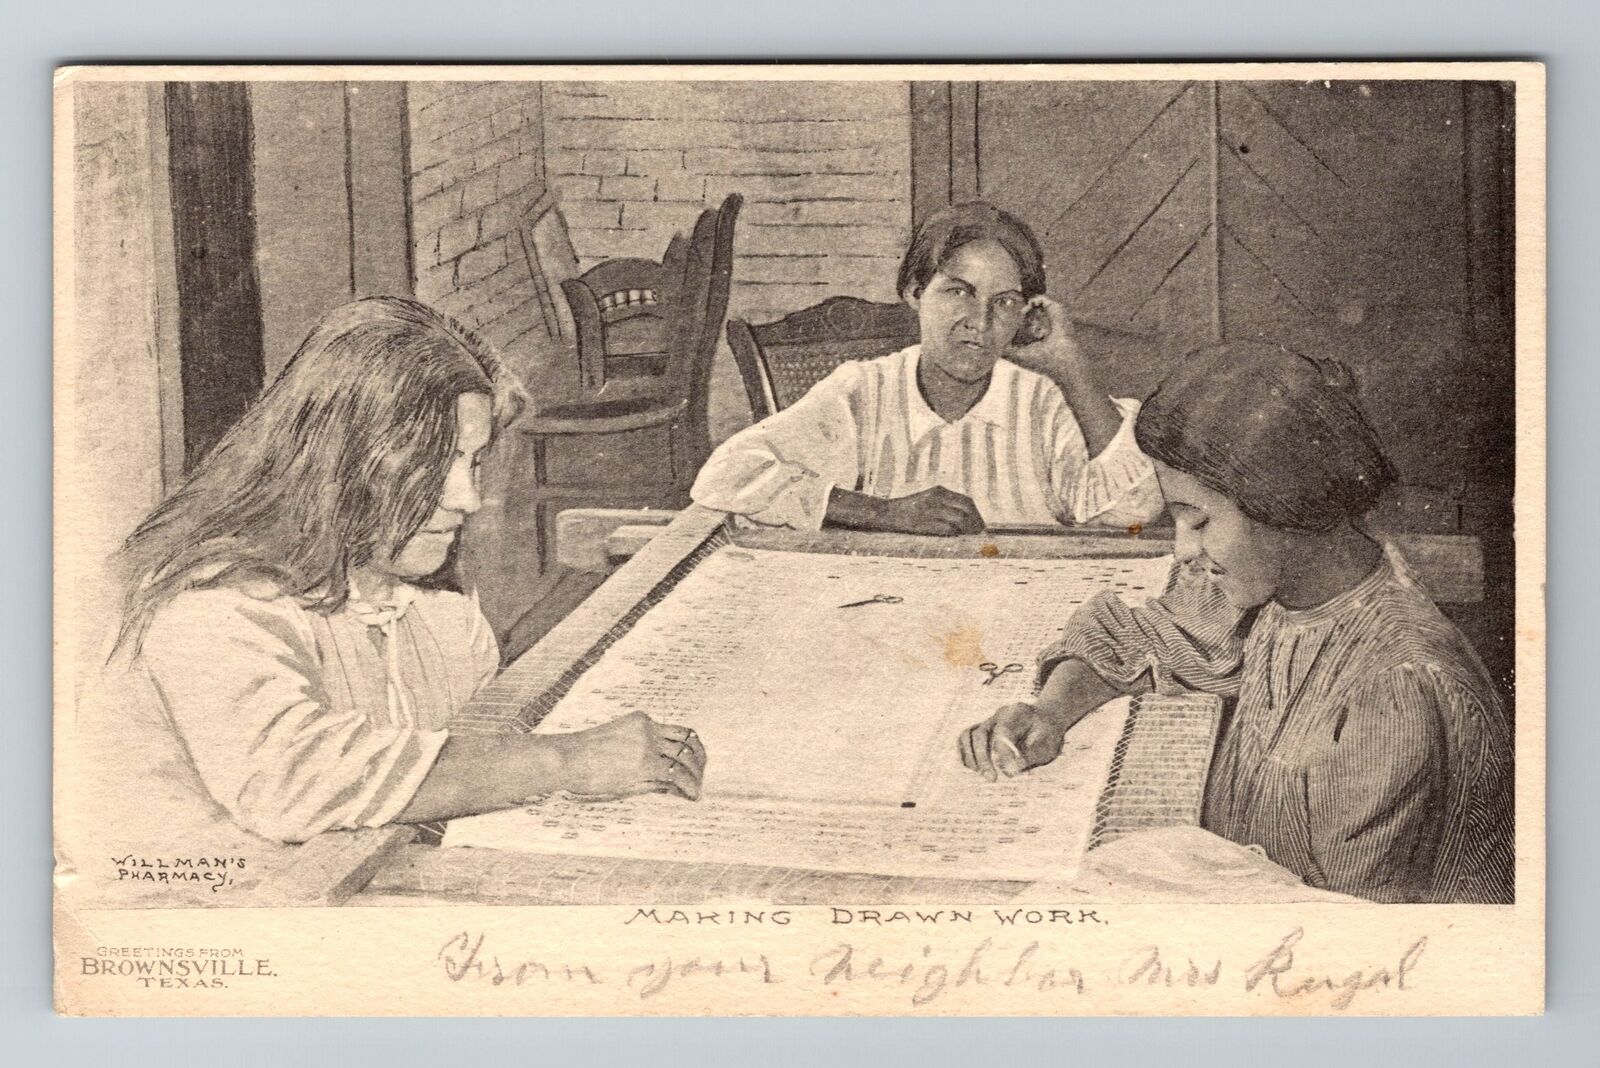 Brownsville TX-Texas, Williams Pharmacy, Making Drawn Work, Vintage Postcard